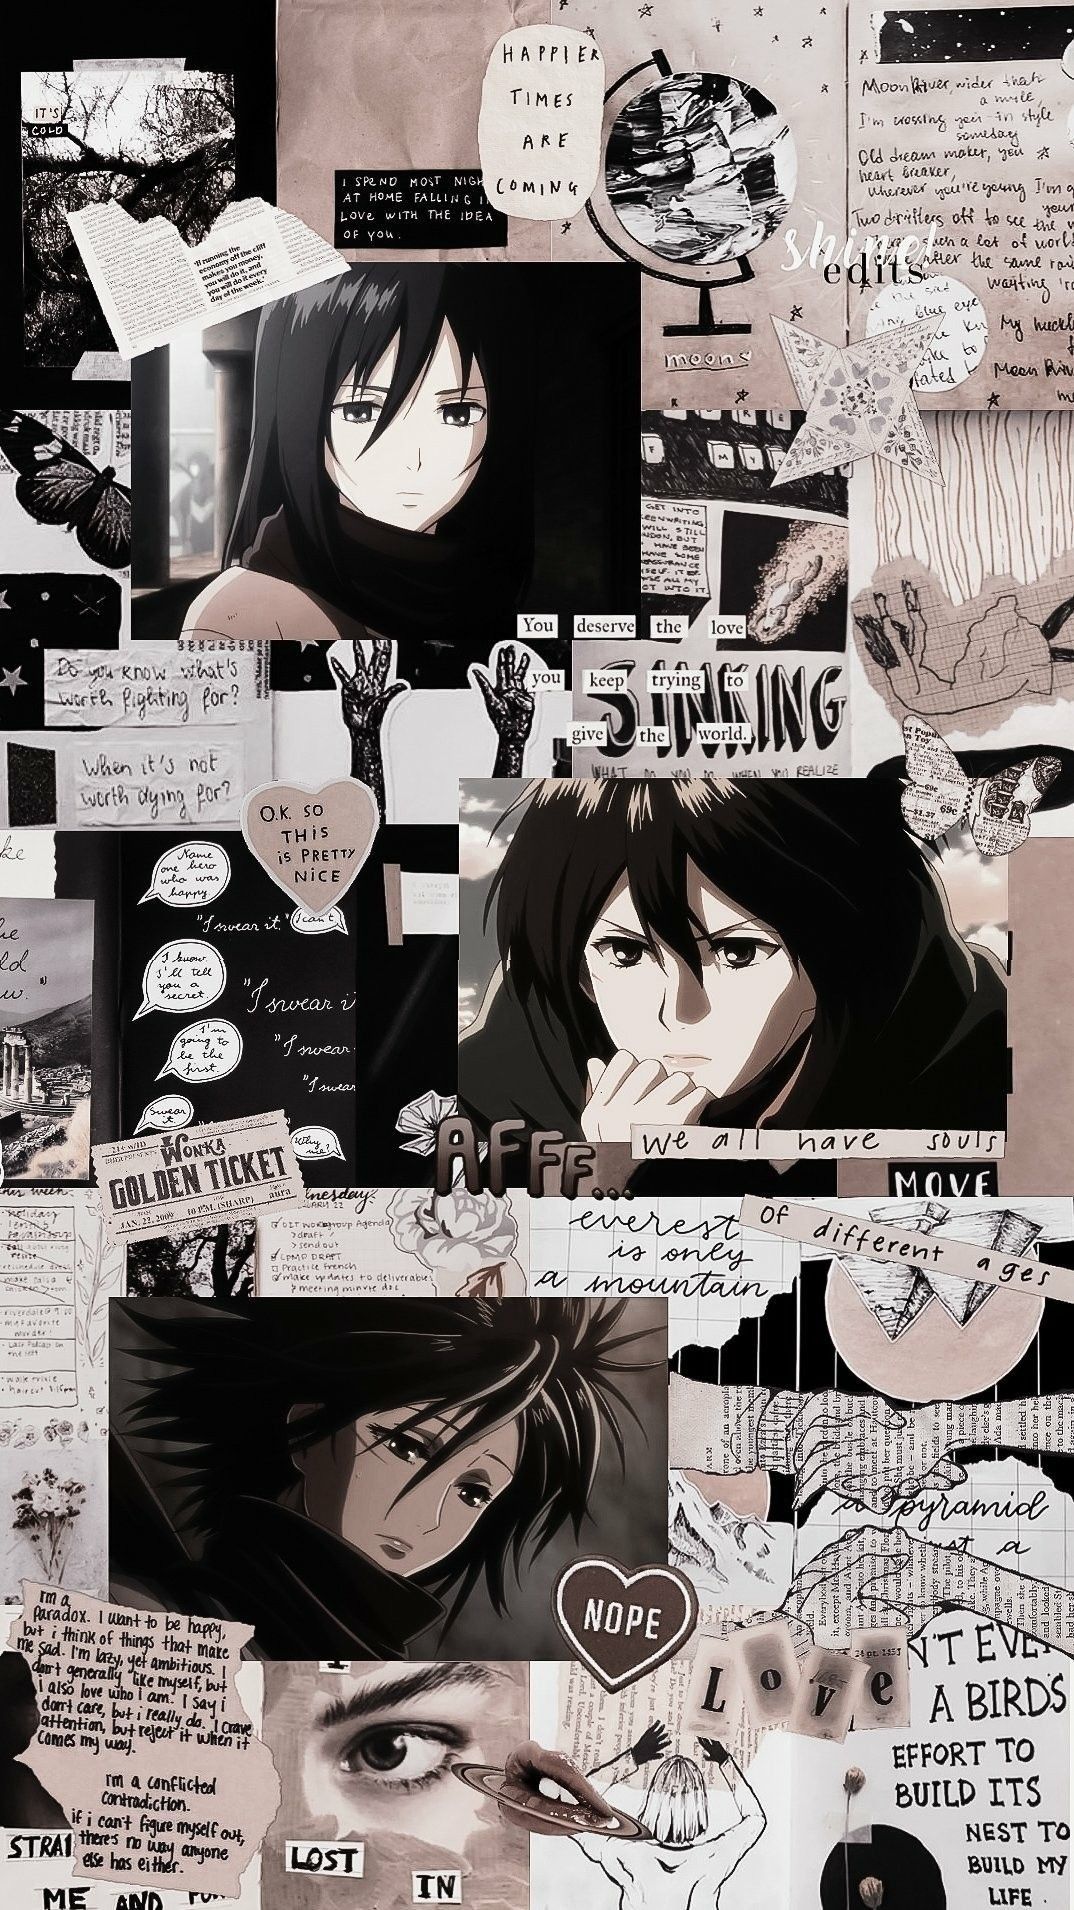 Mikasa ackerman. Cute anime wallpaper, Anime background wallpaper, Aesthetic anime